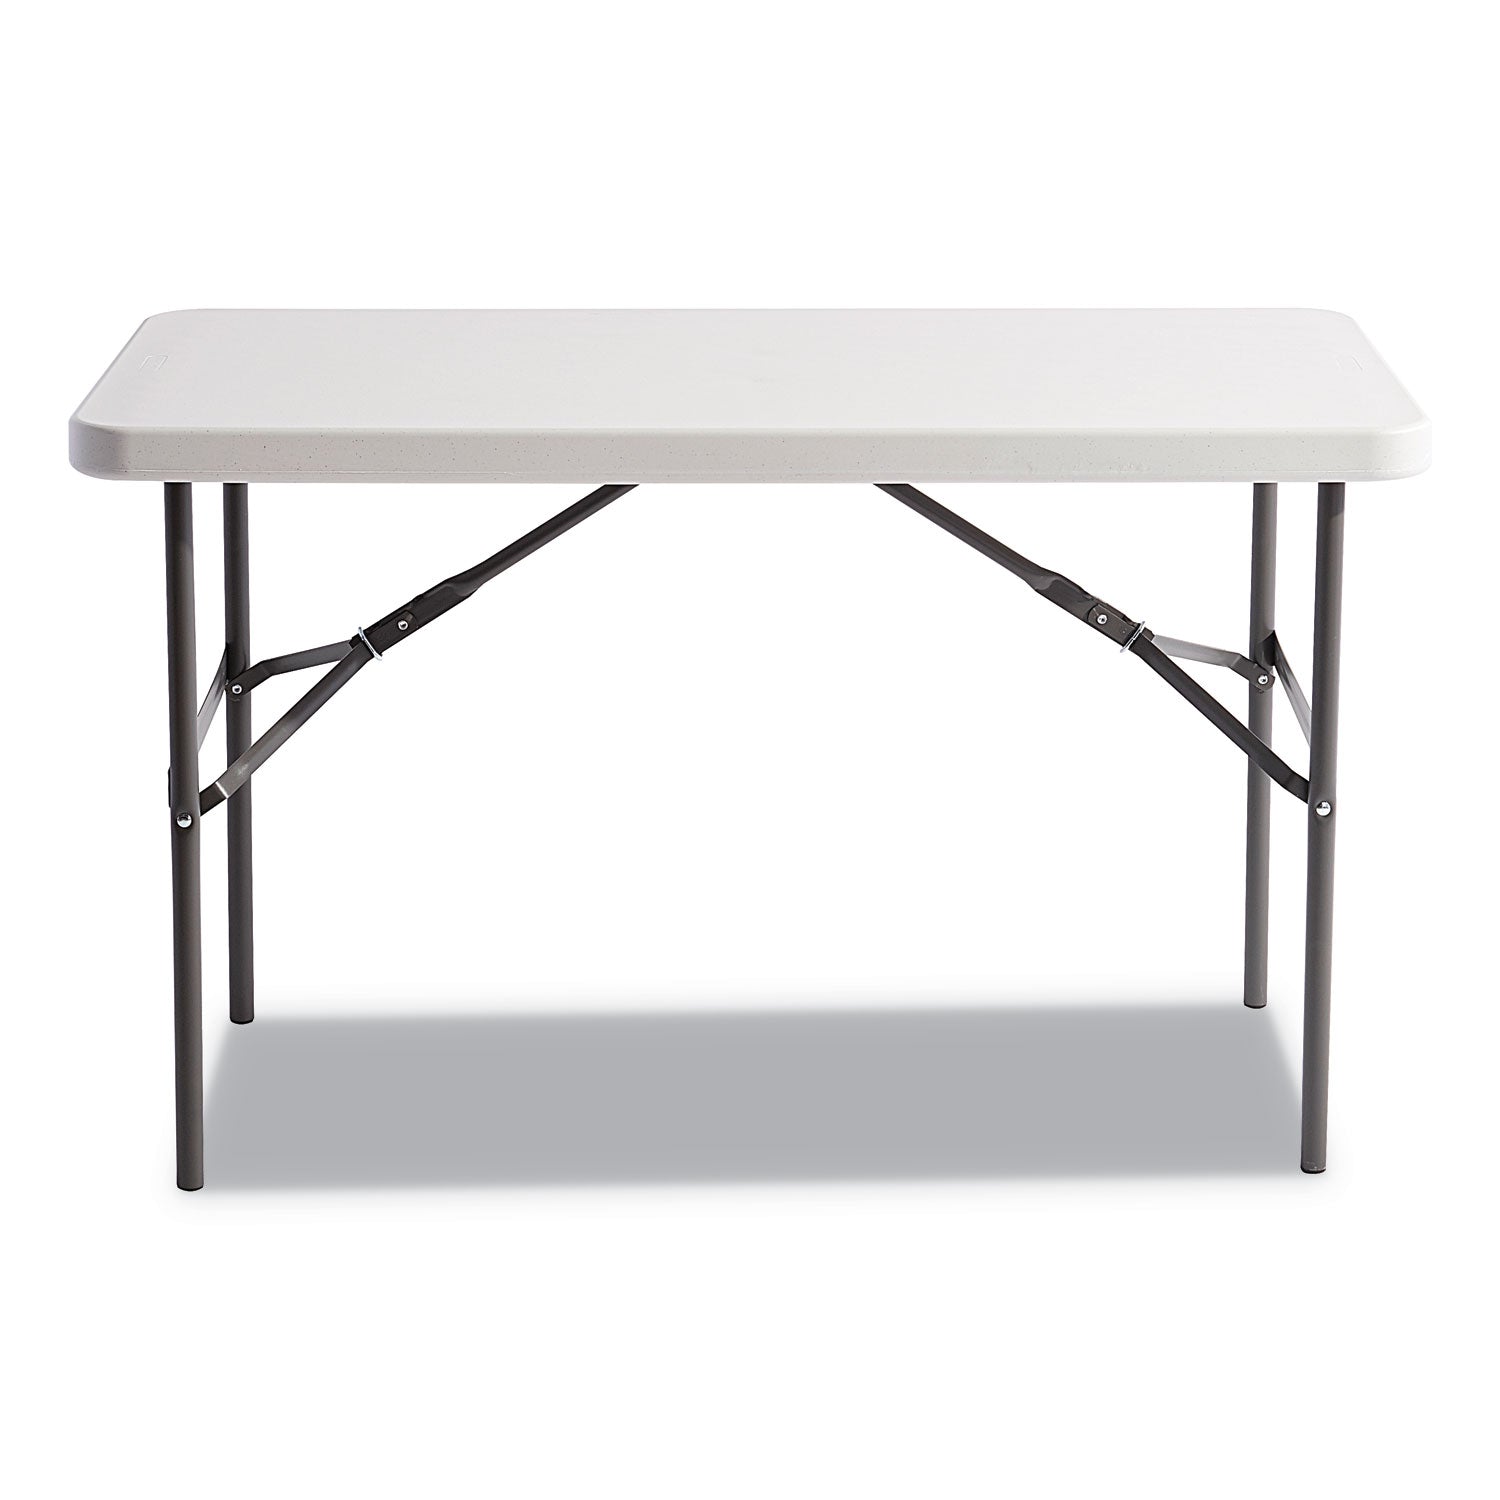 Banquet Folding Table, Rectangular, Radius Edge, 48w x 24d x 29h, Platinum/Charcoal - 